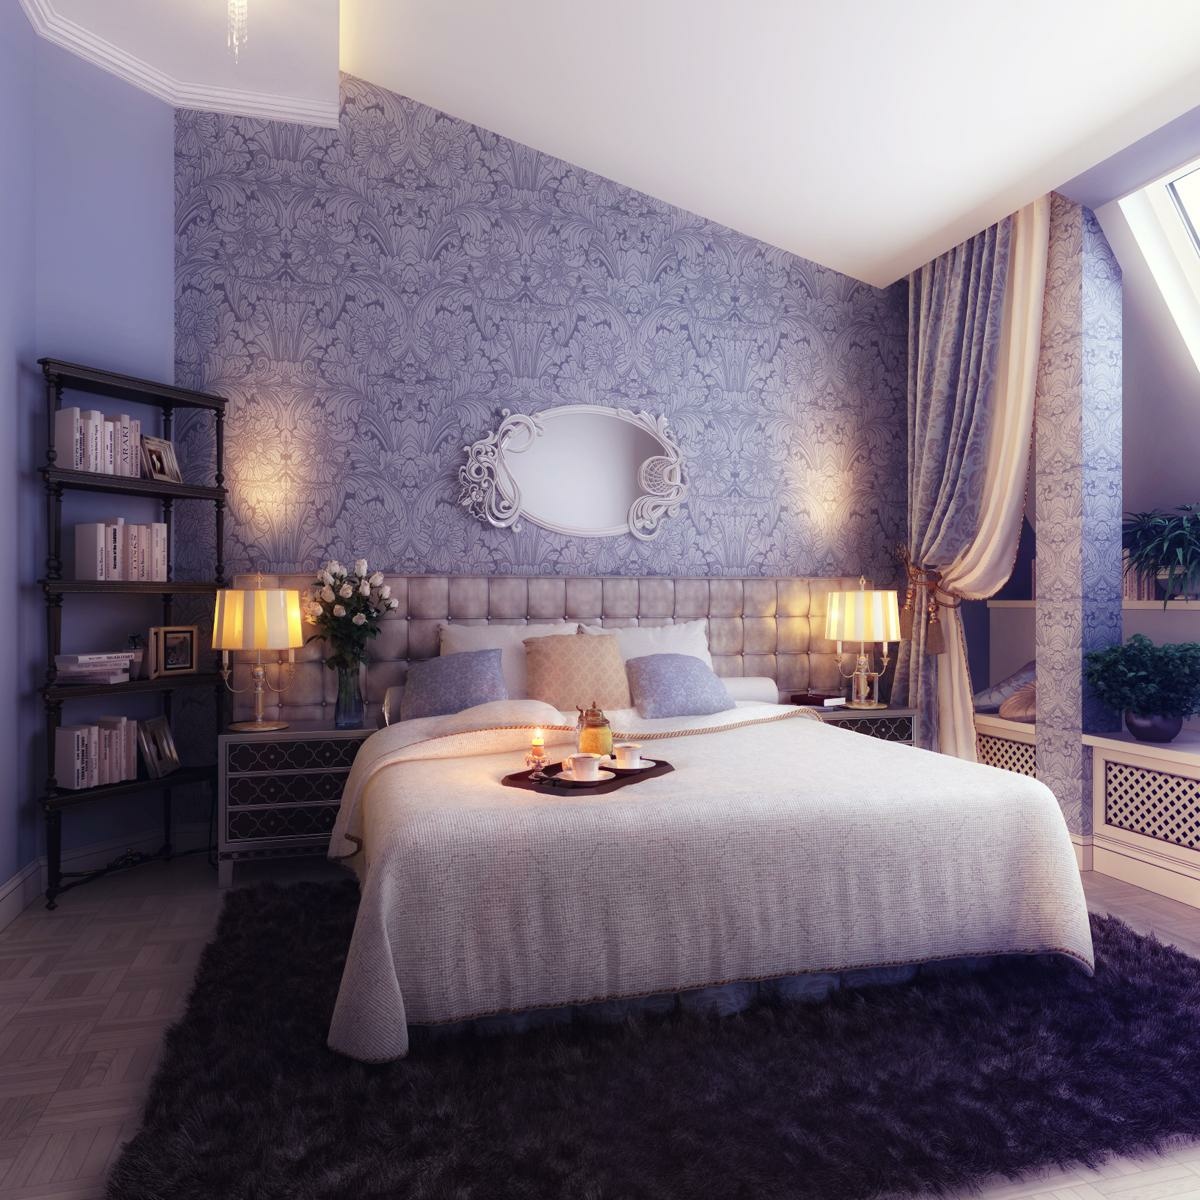 purple classic elegant bedroom "width =" 1200 "height =" 1200 "srcset =" https://mileray.com/wp-content/uploads/2020/05/1588509601_477_Decorating-Elegant-Bedroom-Designs-Adding-a-Perfect-Classic-and-Luxury.jpg 1200w, https://mileray.com/wp -content / uploads / 2016/09 / Irena2-150x150.jpg 150w, https://mileray.com/wp-content/uploads/2016/09/Irena2-300x300.jpg 300w, https://mileray.com/wp -content / uploads / 2016/09 / Irena2-768x768.jpg 768w, https://mileray.com/wp-content/uploads/2016/09/Irena2-1024x1024.jpg 1024w, https://mileray.com/wp -content / uploads / 2016/09 / Irena2-696x696.jpg 696w, https://mileray.com/wp-content/uploads/2016/09/Irena2-1068x1068.jpg 1068w, https://mileray.com/wp -content / uploads / 2016/09 / Irena2-420x420.jpg 420w "sizes =" (maximum width: 1200px) 100vw, 1200px